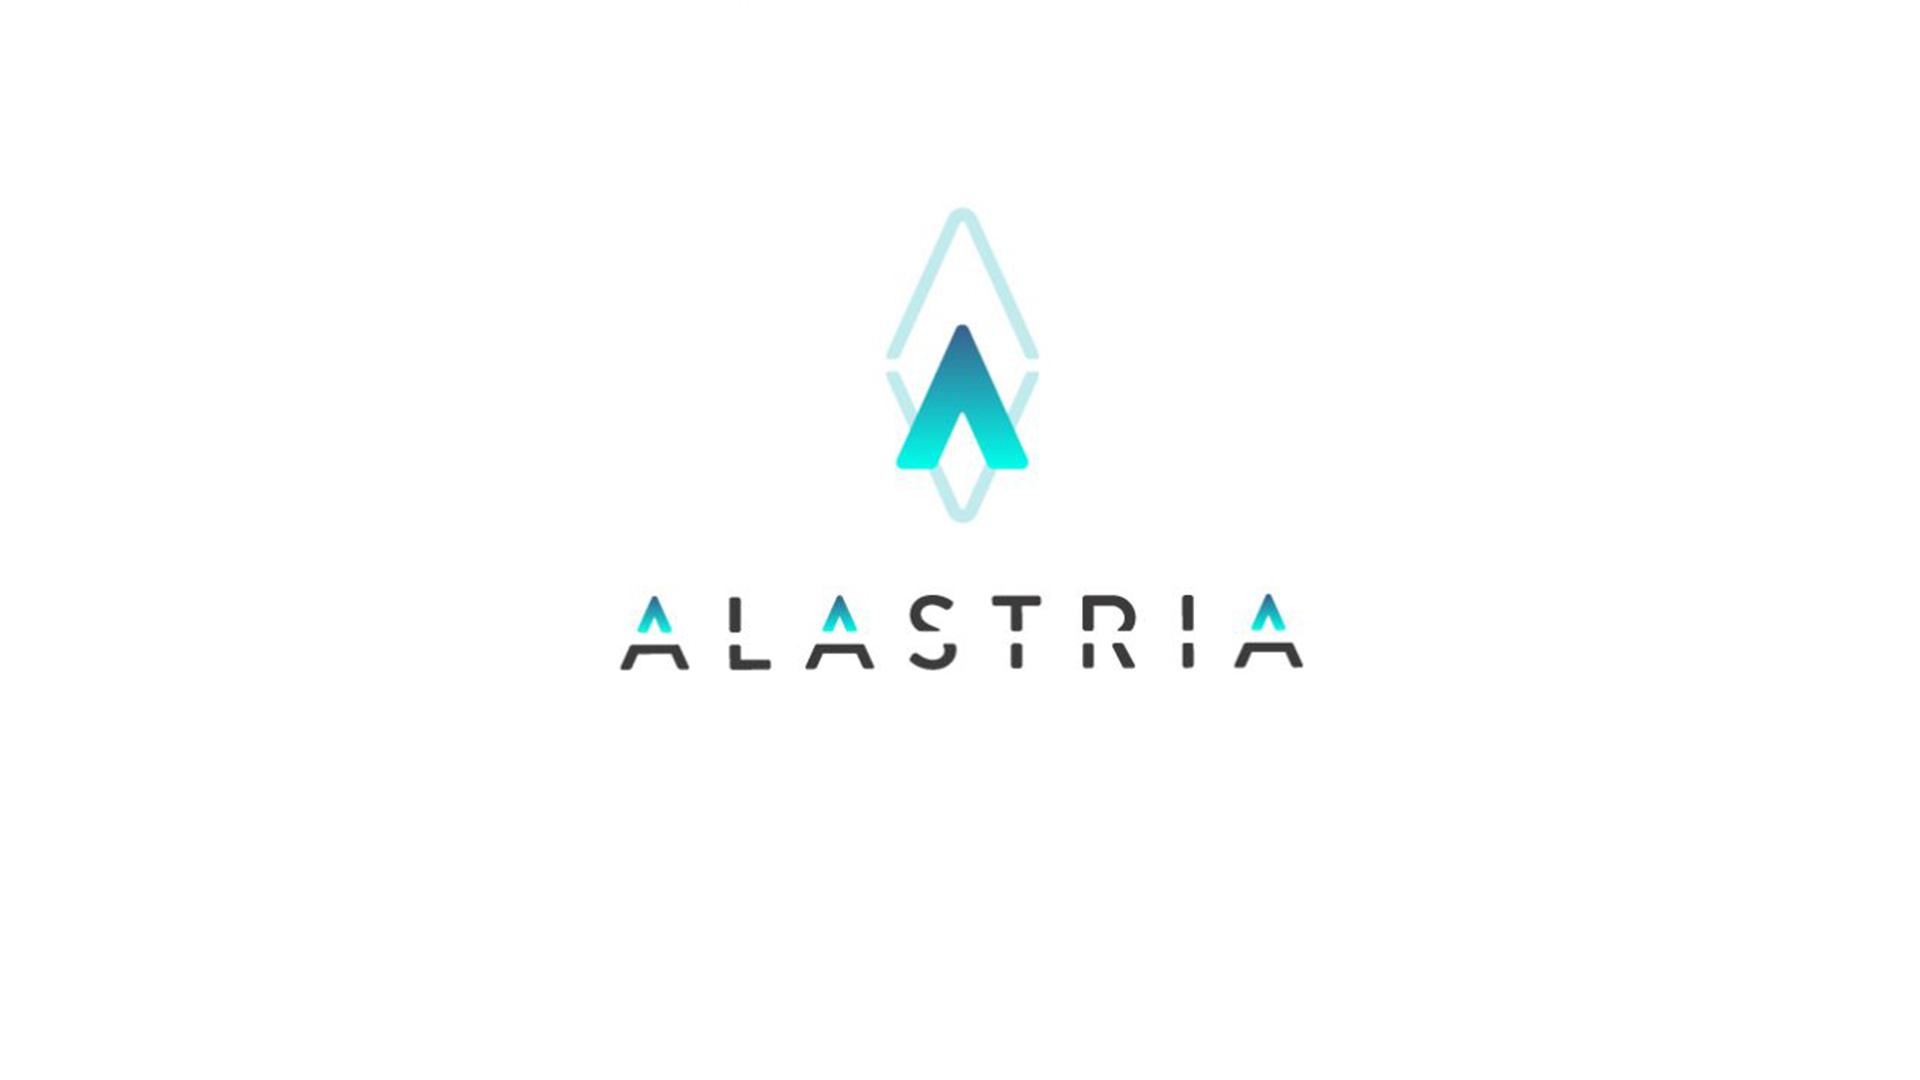 ALASTRIA_grande-1